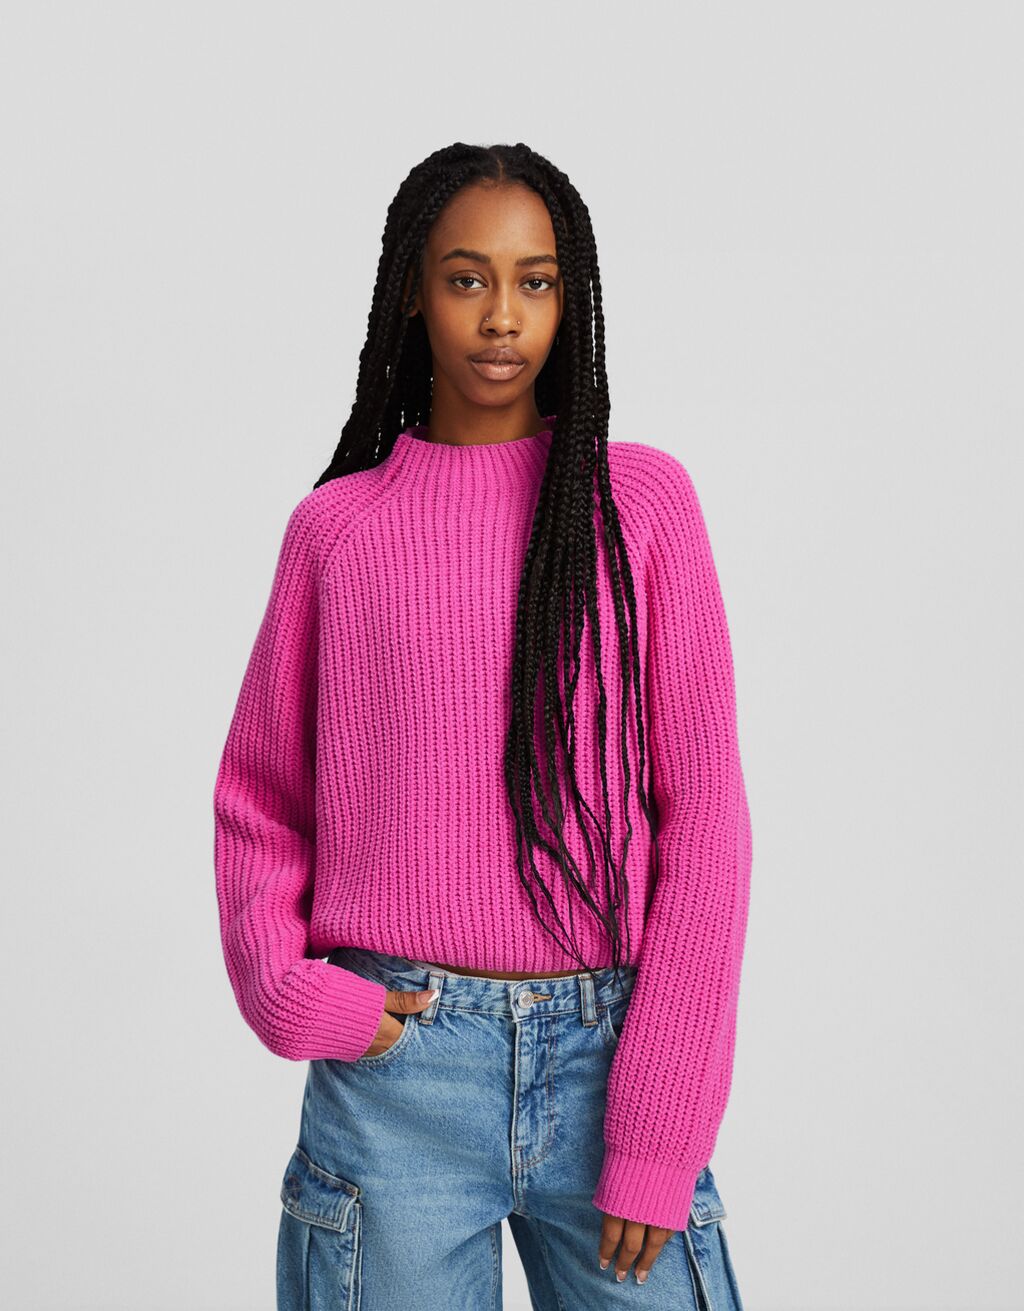 High neck chenille sweater